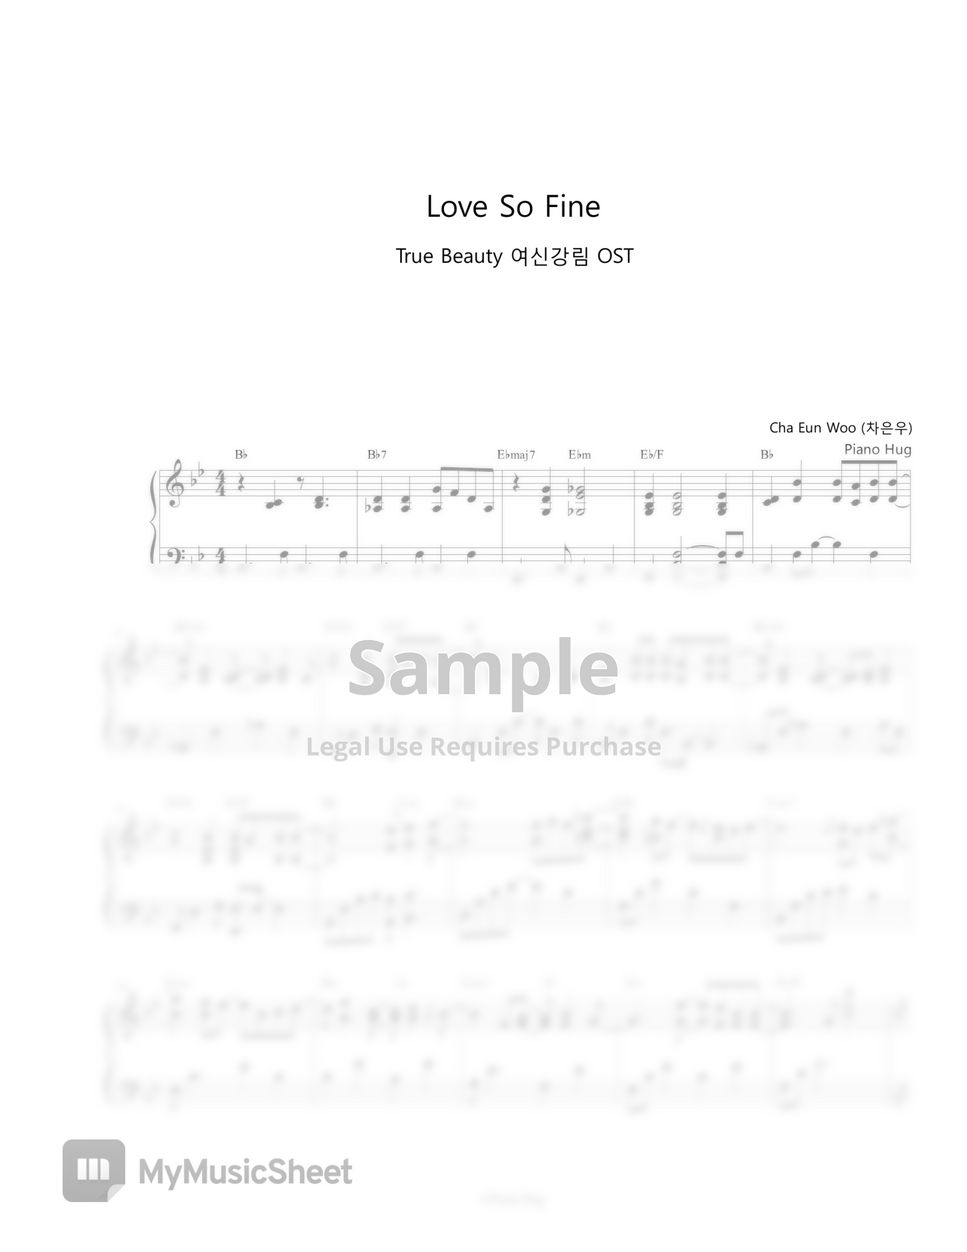 Cha Eun Woo (차은우) - Love So Fine (True Beauty OST) by Piano Hug